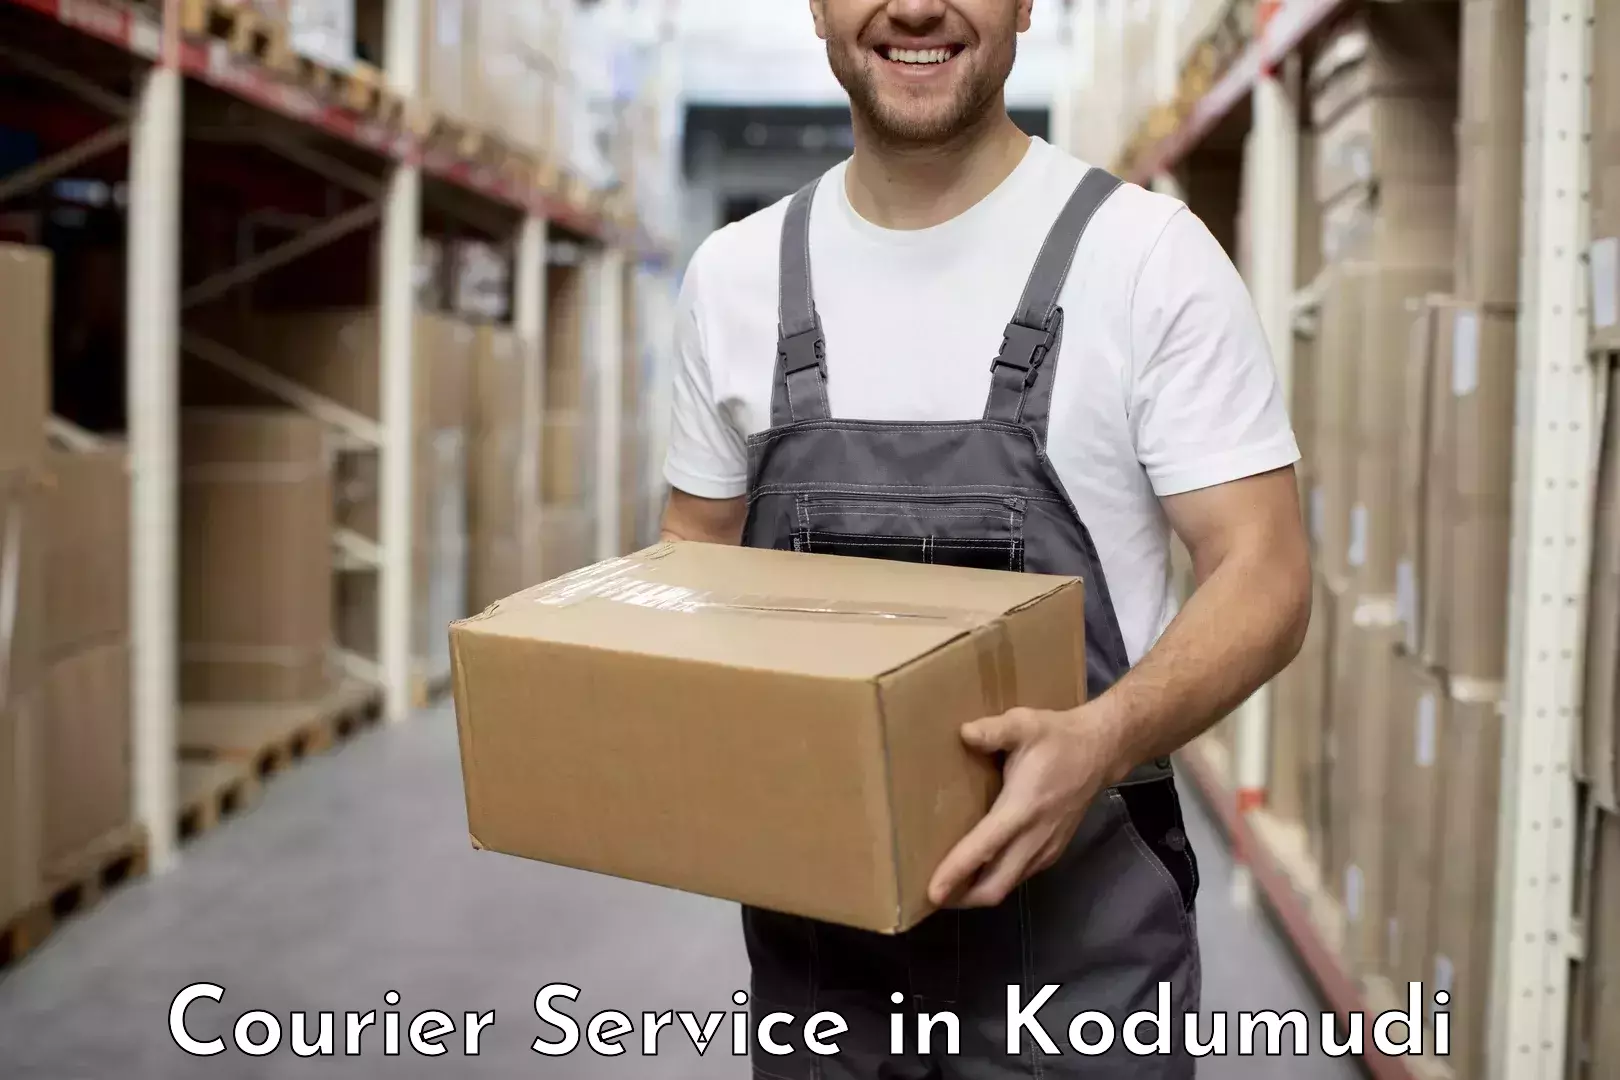 Efficient order fulfillment in Kodumudi